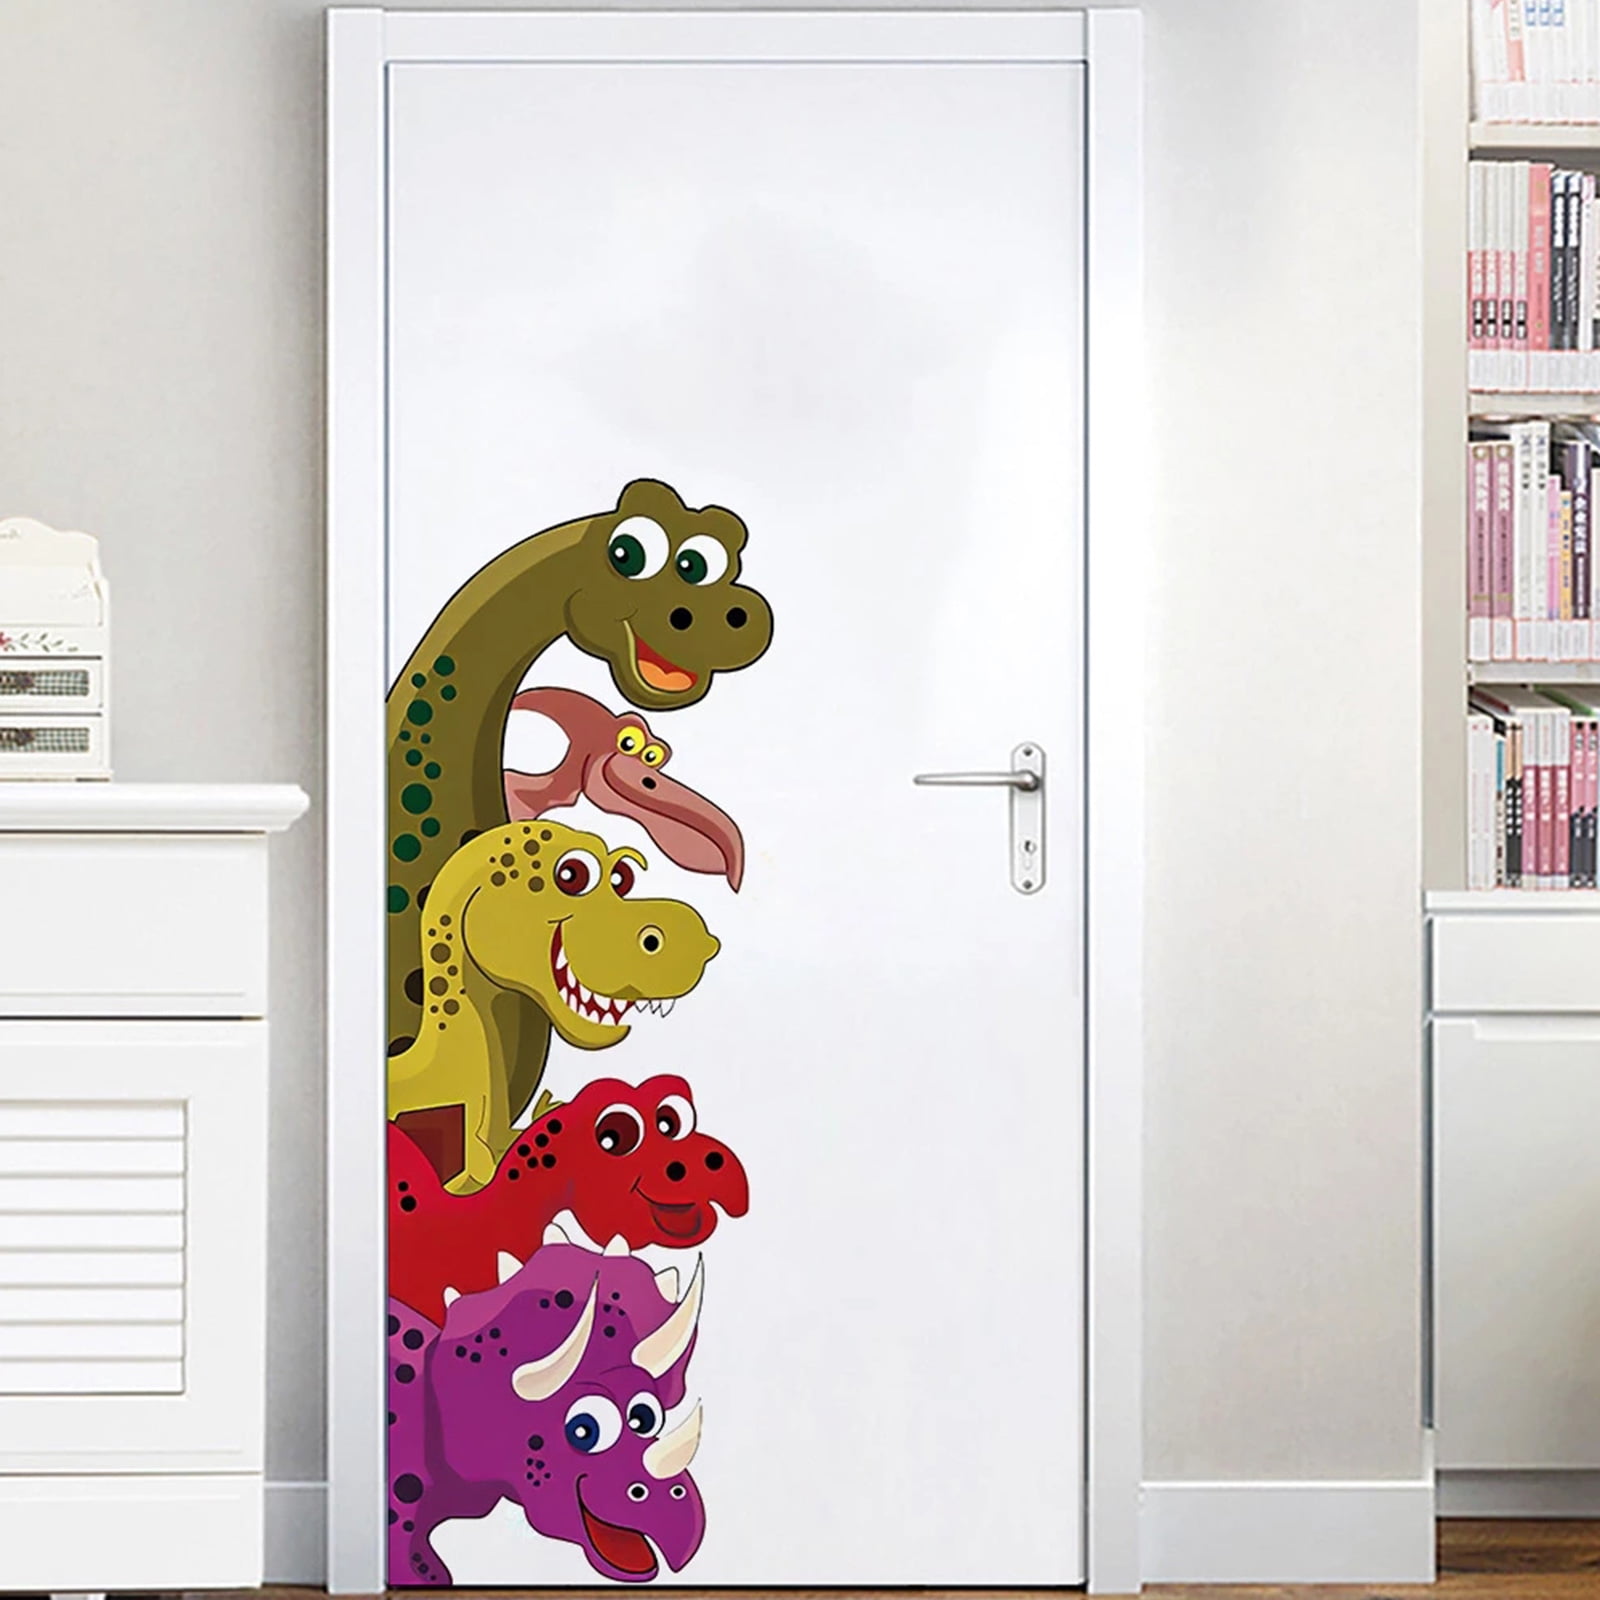 Dinosaur Wall Stickers Boys Vinyl Transfer Decals Bed Room Home Art Graphics